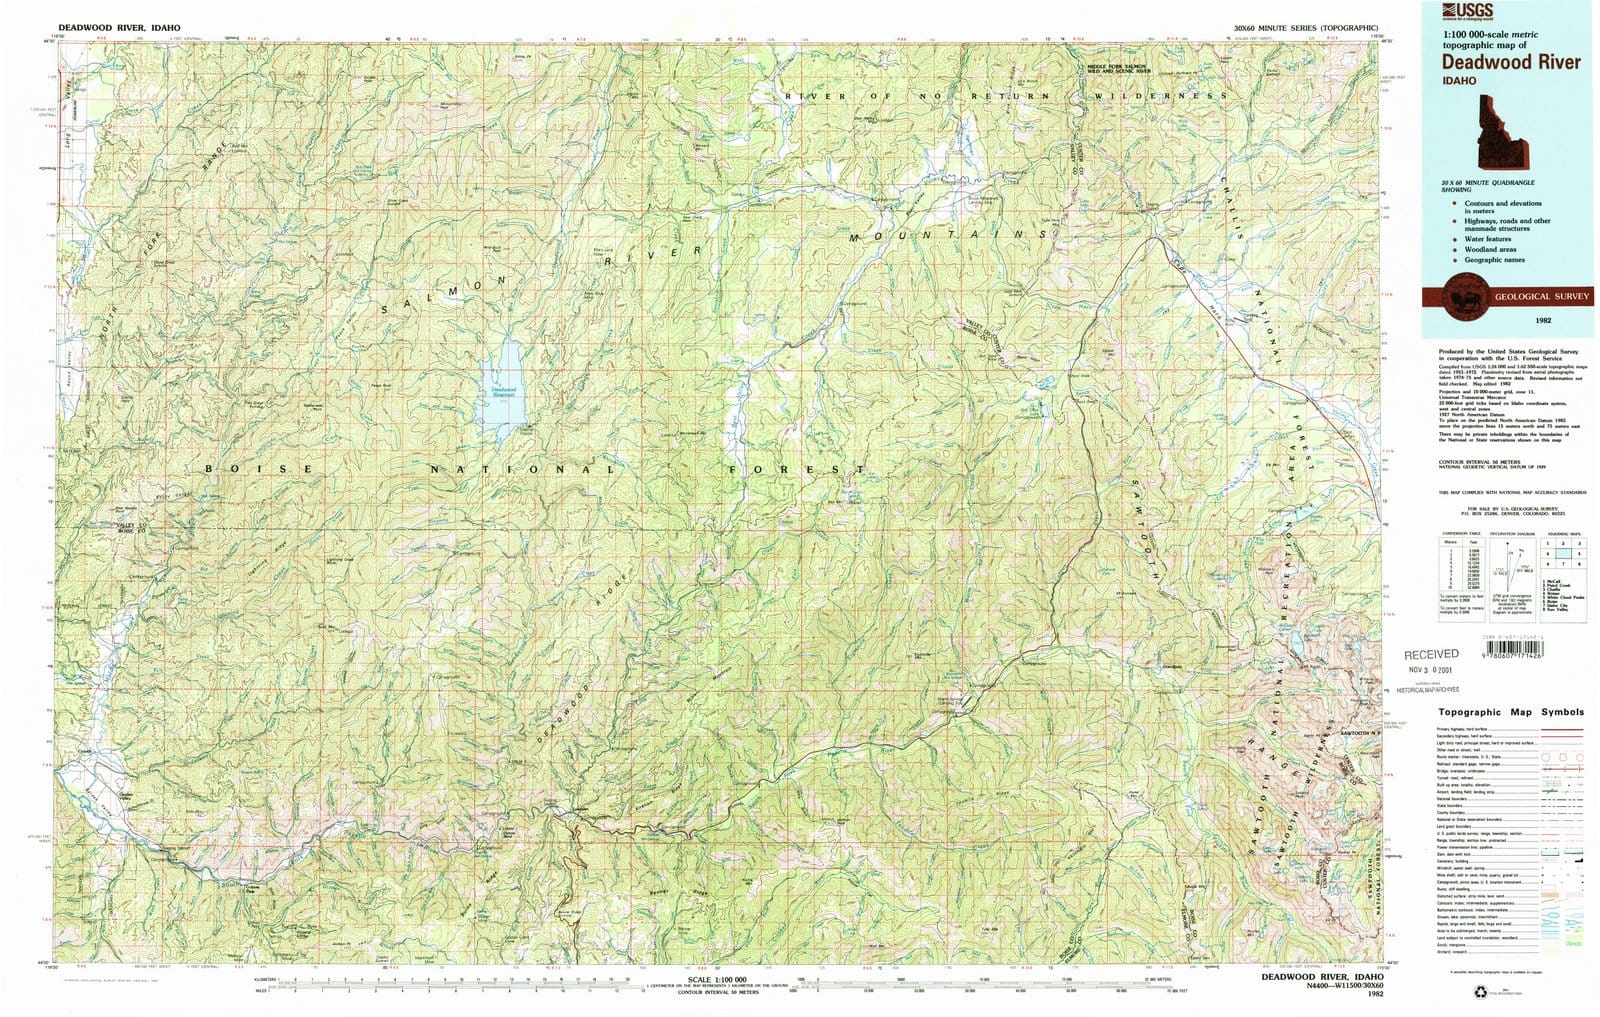 1982 Deadwood River, ID - Idaho - USGS Topographic Map